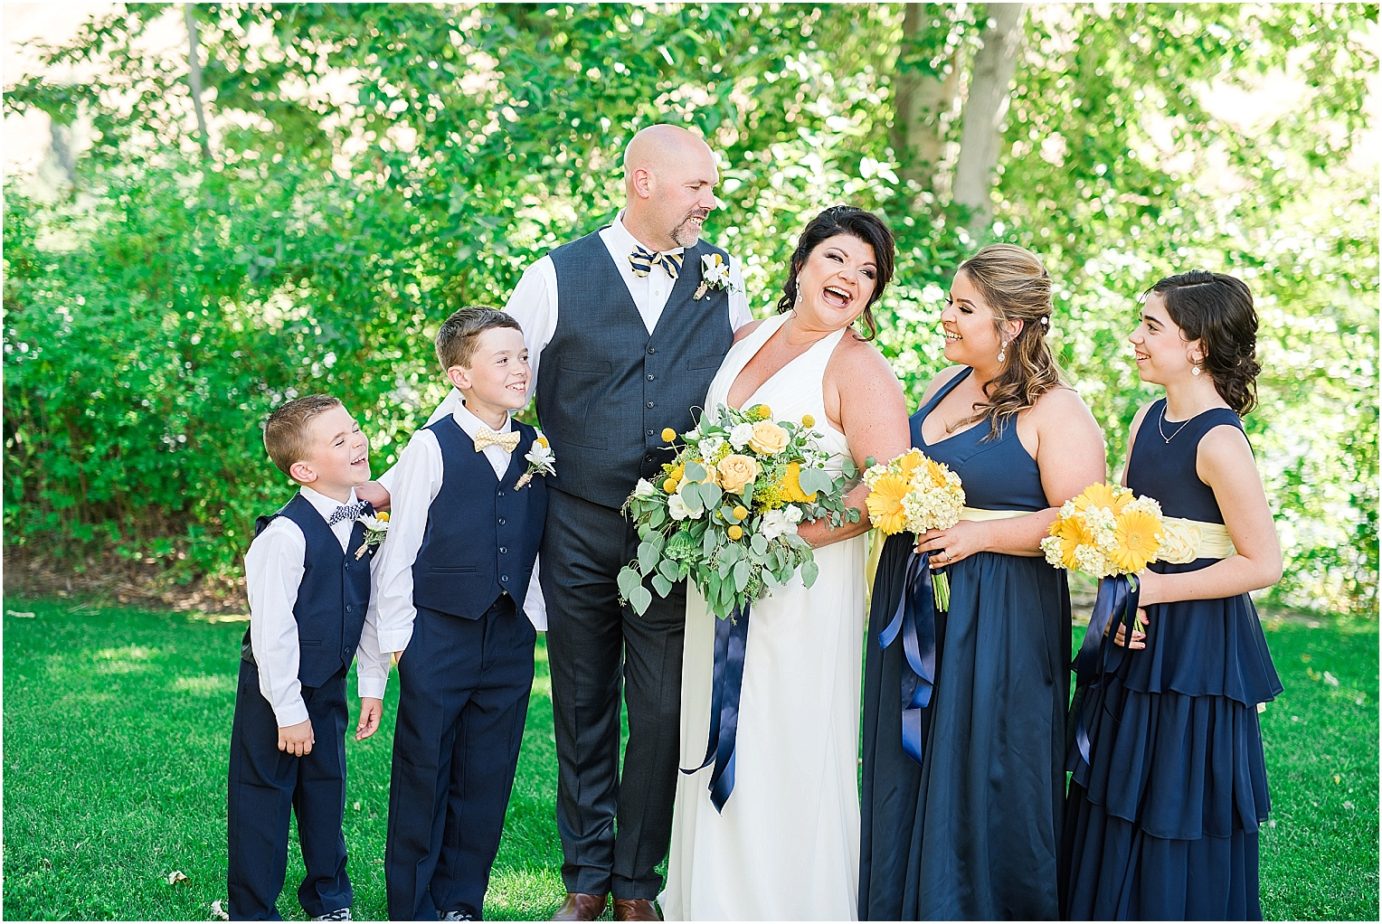 Warm Springs Inn Wedding Wenatchee WA Dana and Terri bride and groom with family